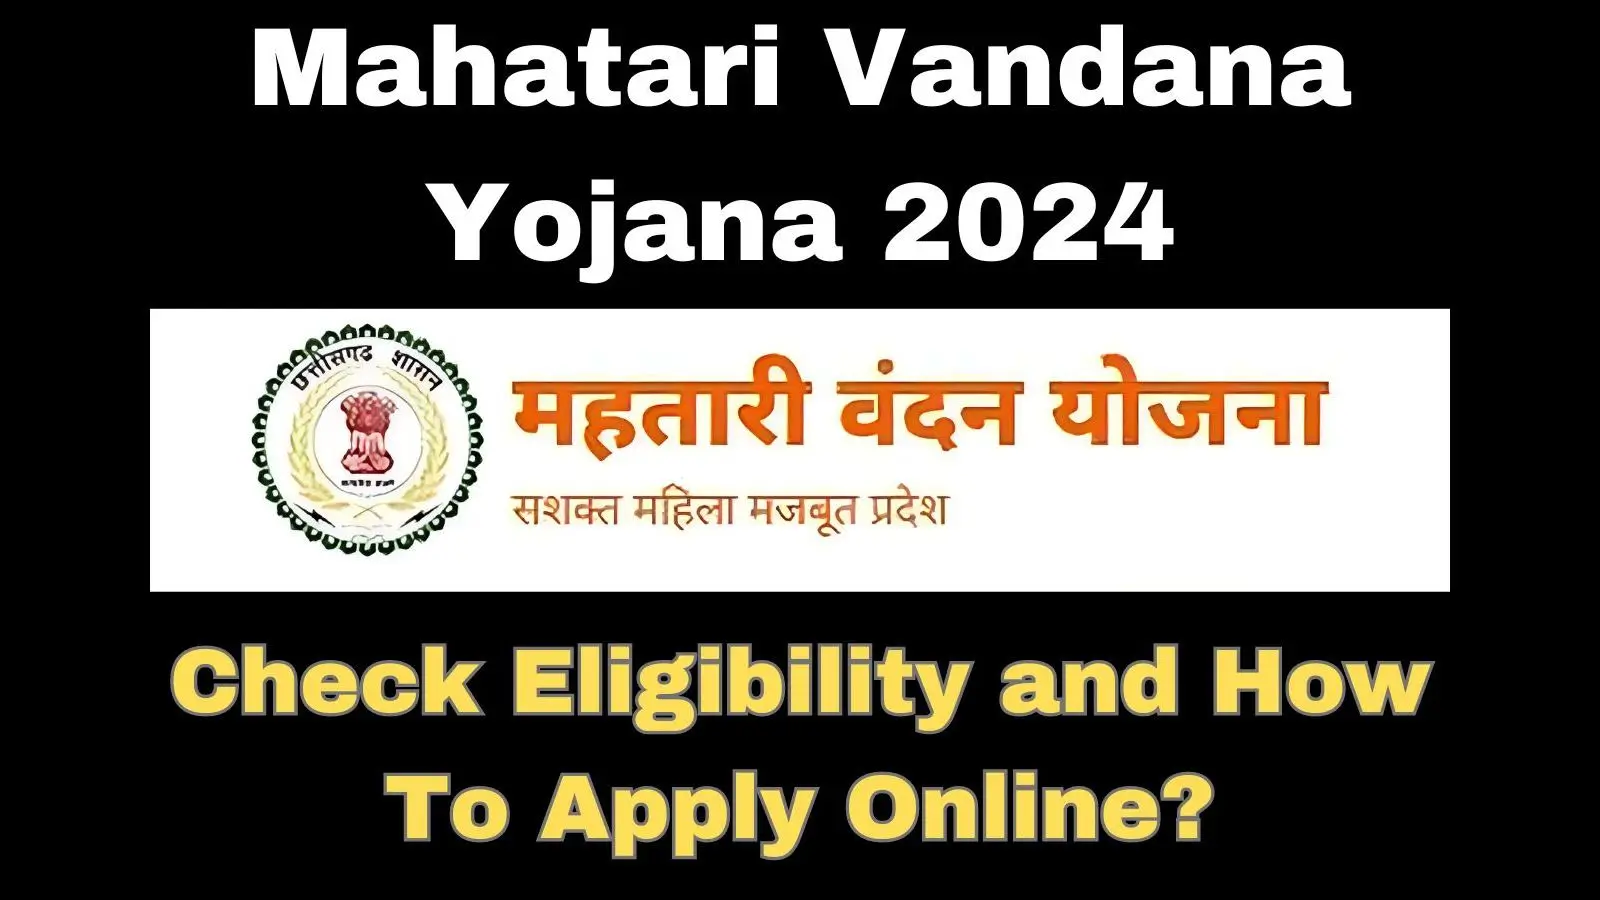 Mahatari Vandana Yojana 2024